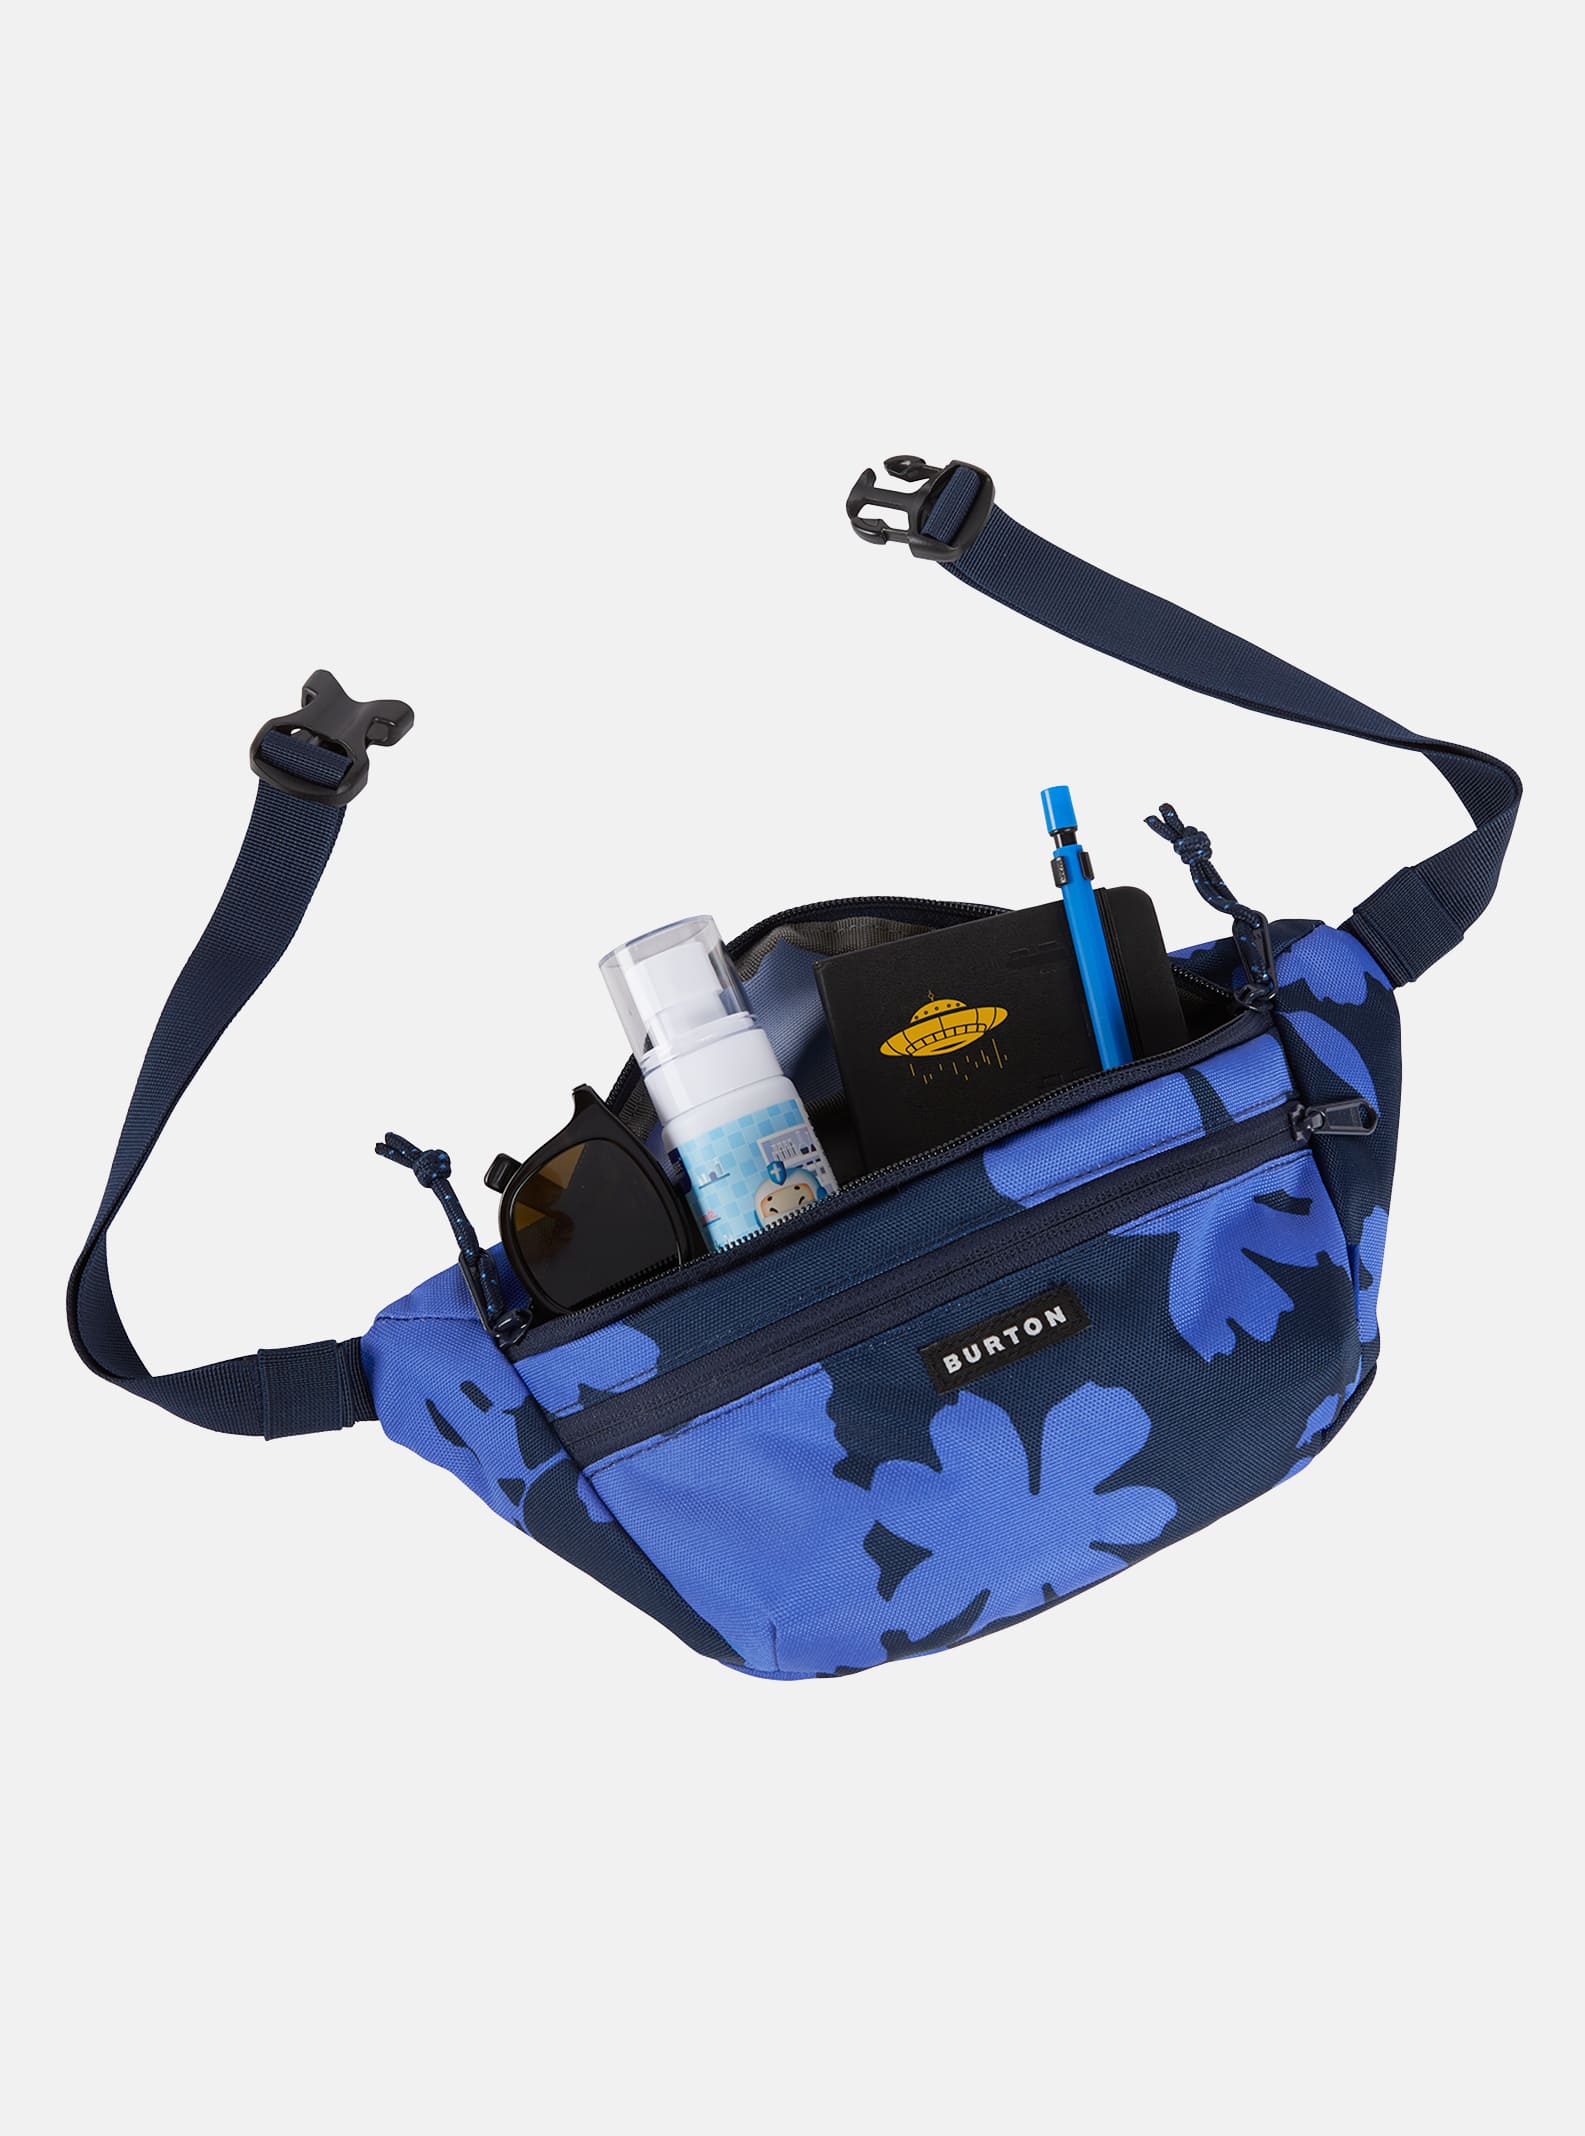 Travel Bags | Burton Snowboards US